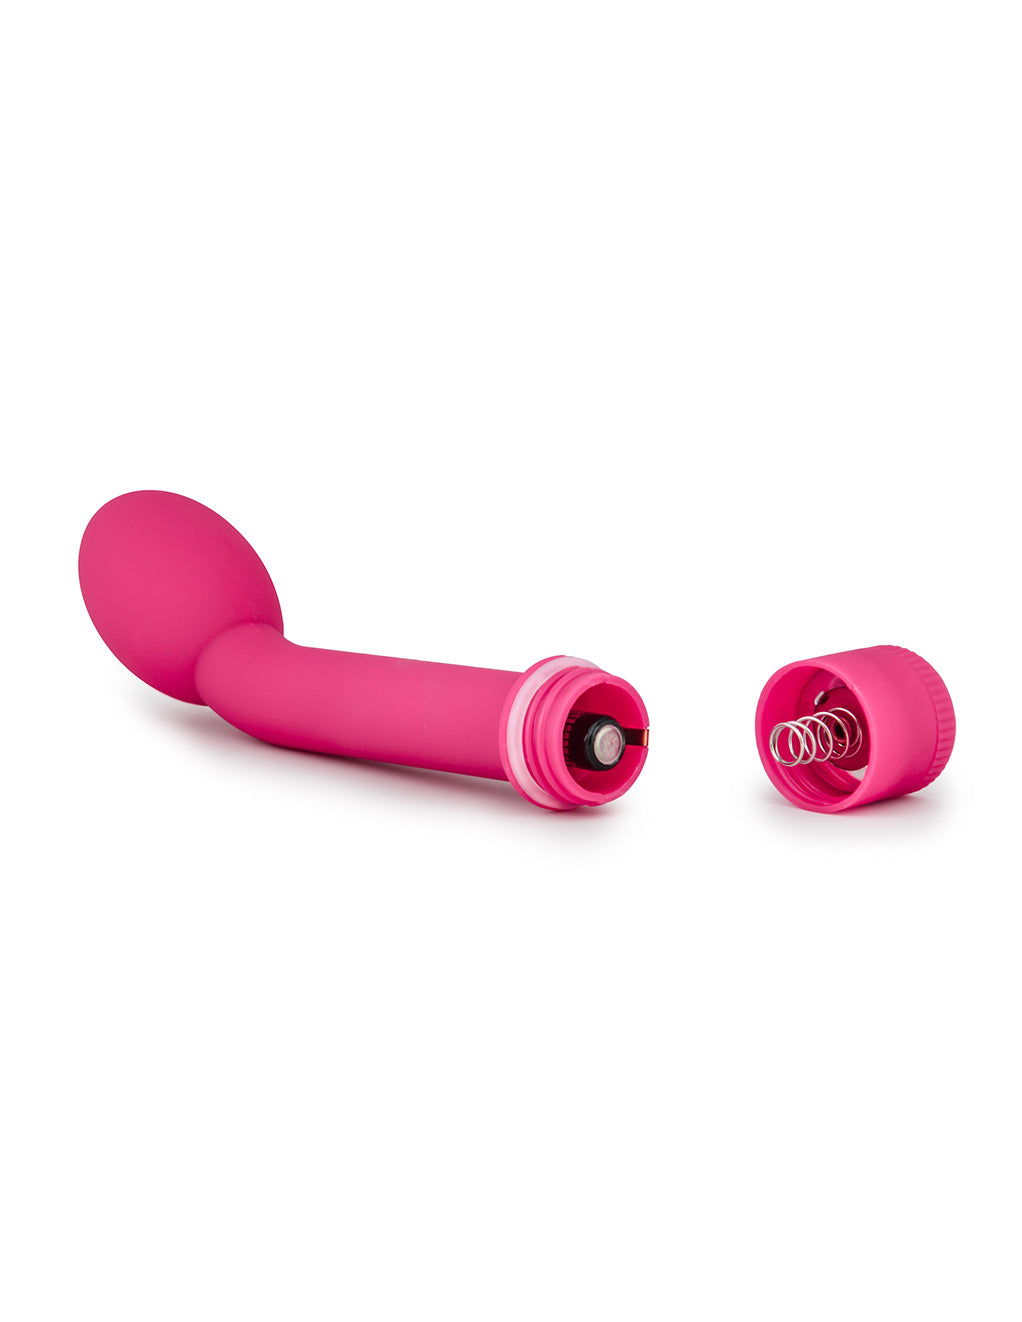 Sexy Things G Slim Petite G-spot Vibrator- Pink- Battery